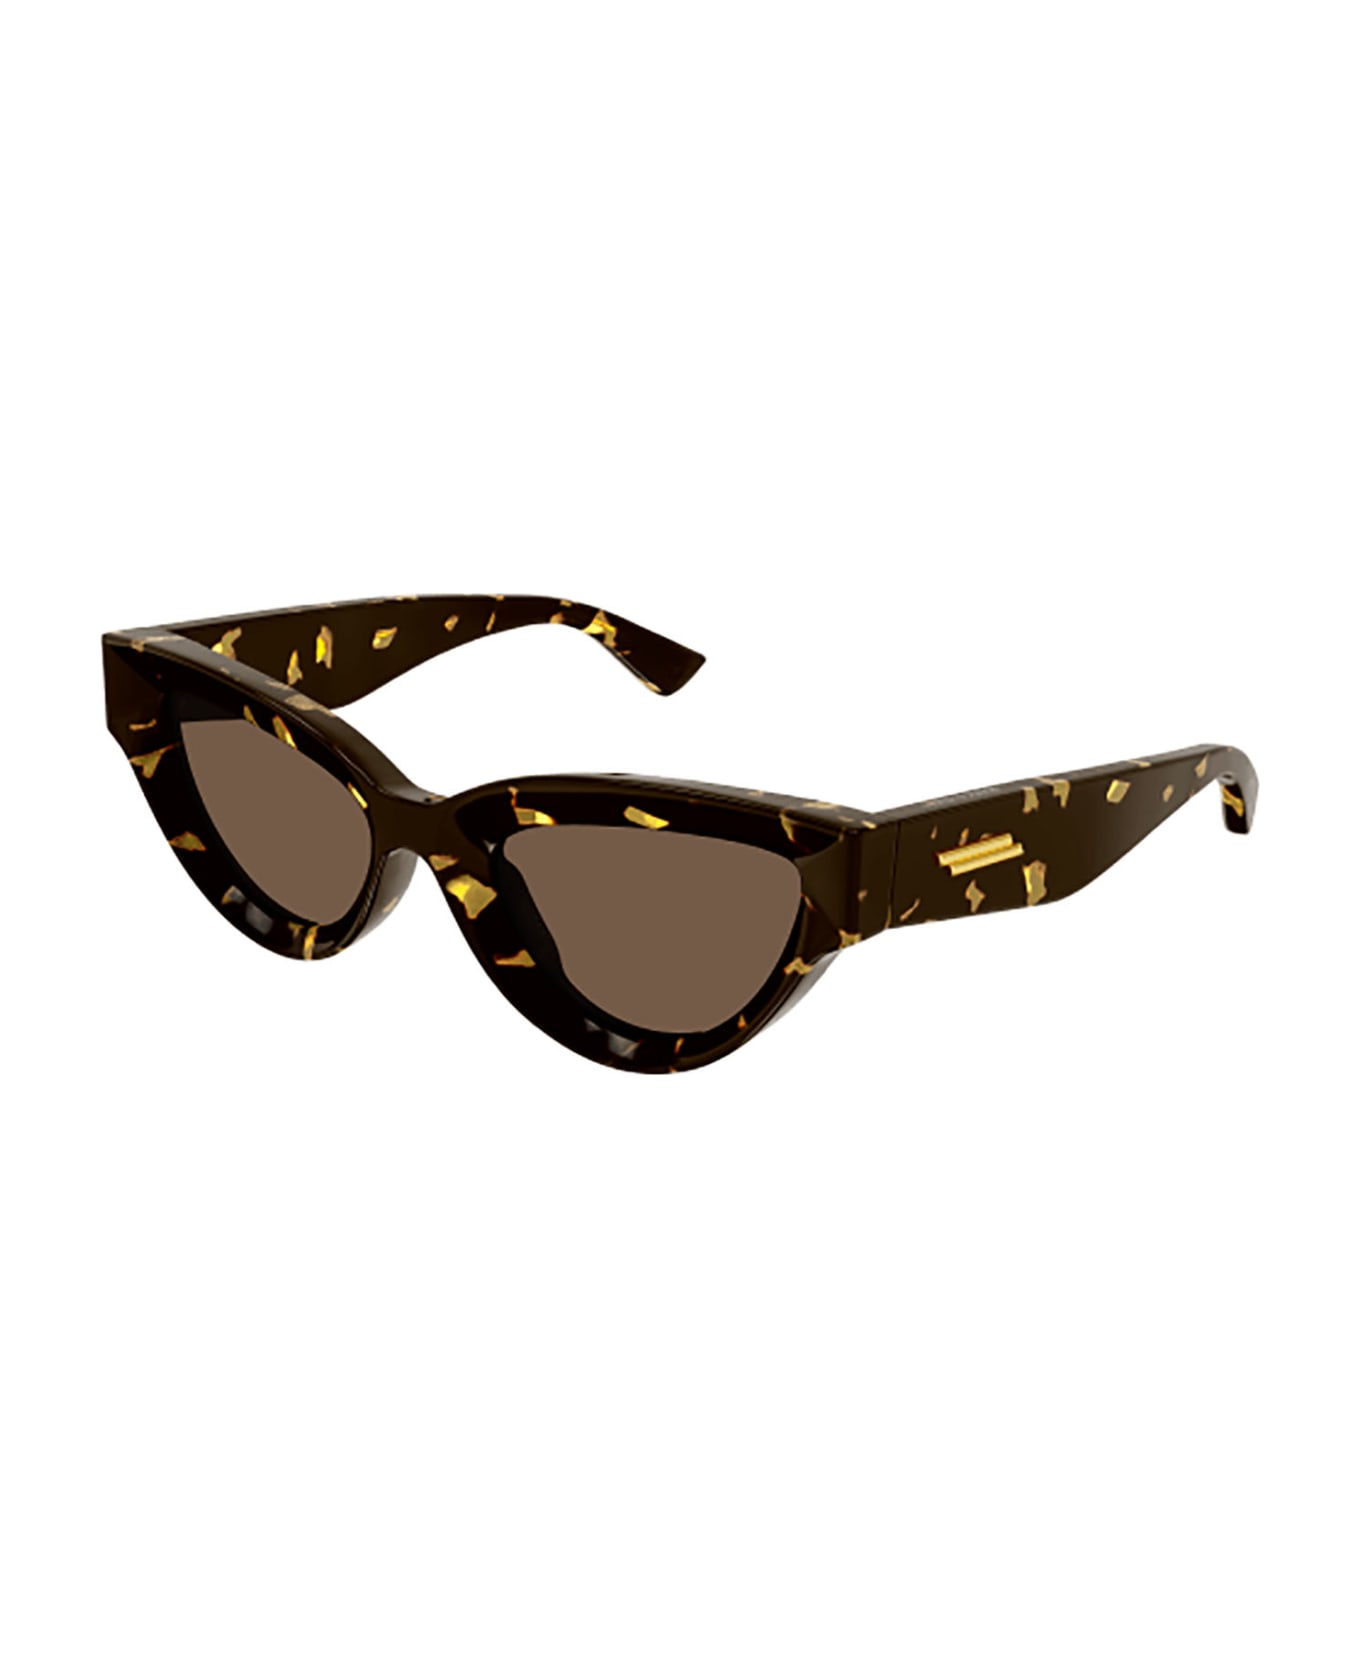 Bottega Veneta Eyewear Bv1249s Sunglasses - 002 havana havana brown サングラス